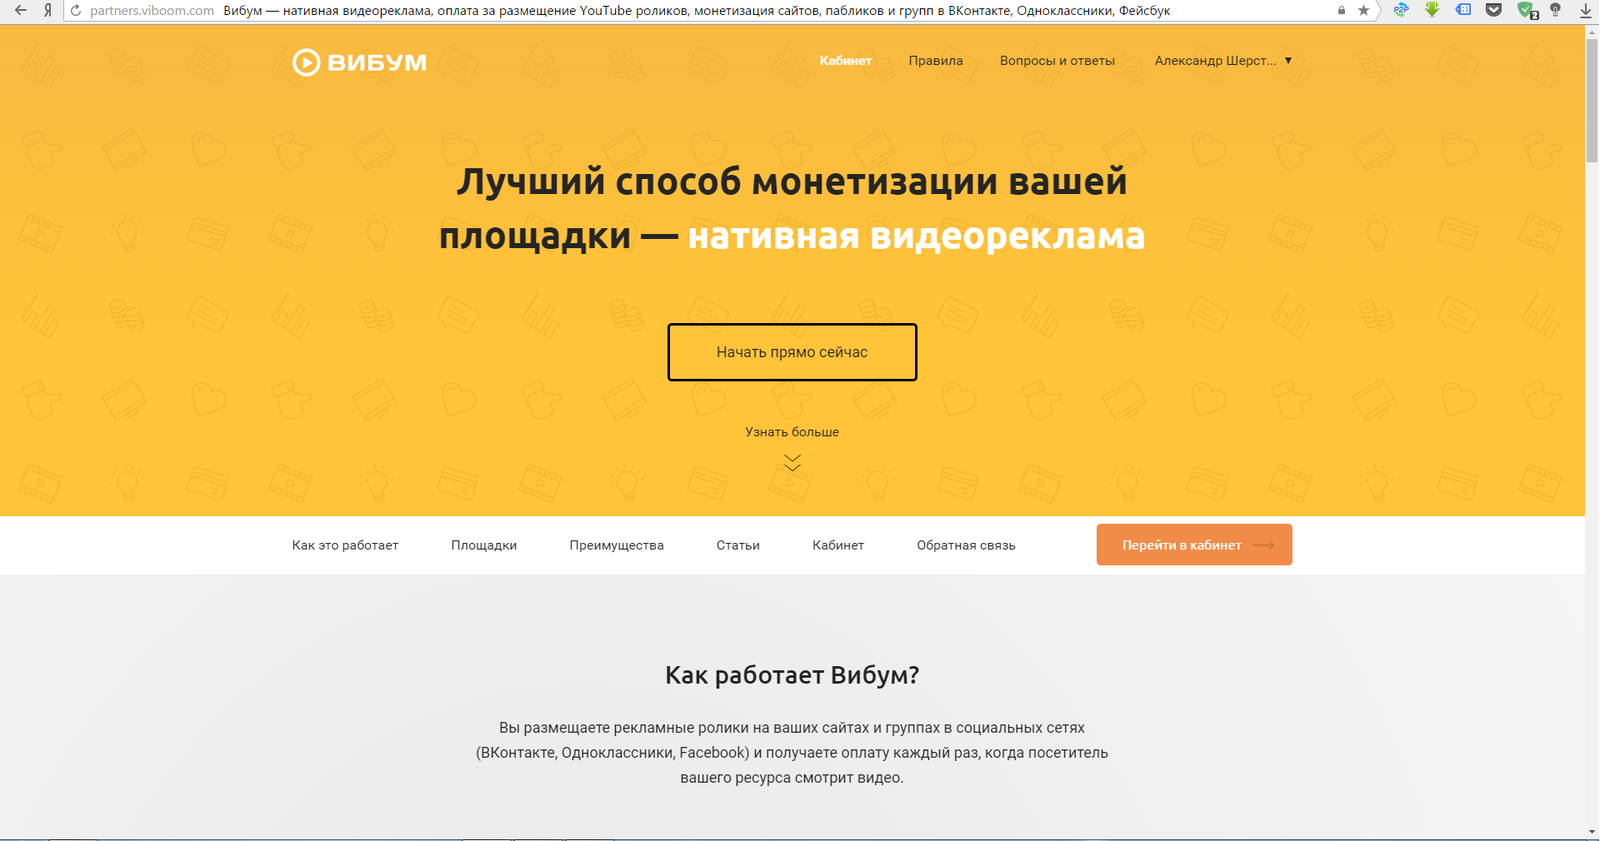 Заработок на рекламе в интернете - 150 000 рублей в месяц